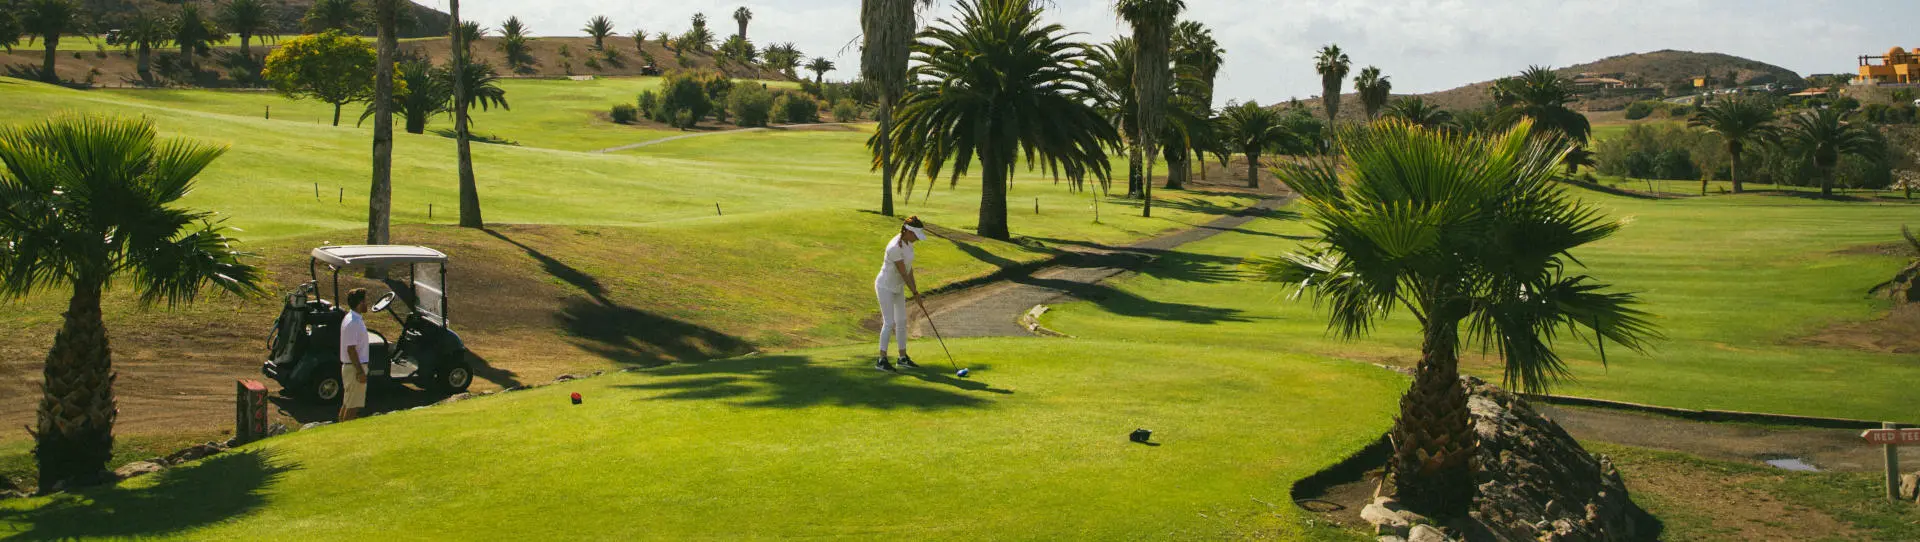 Spain golf holidays - Salobre Old 2 Rounds - Photo 1